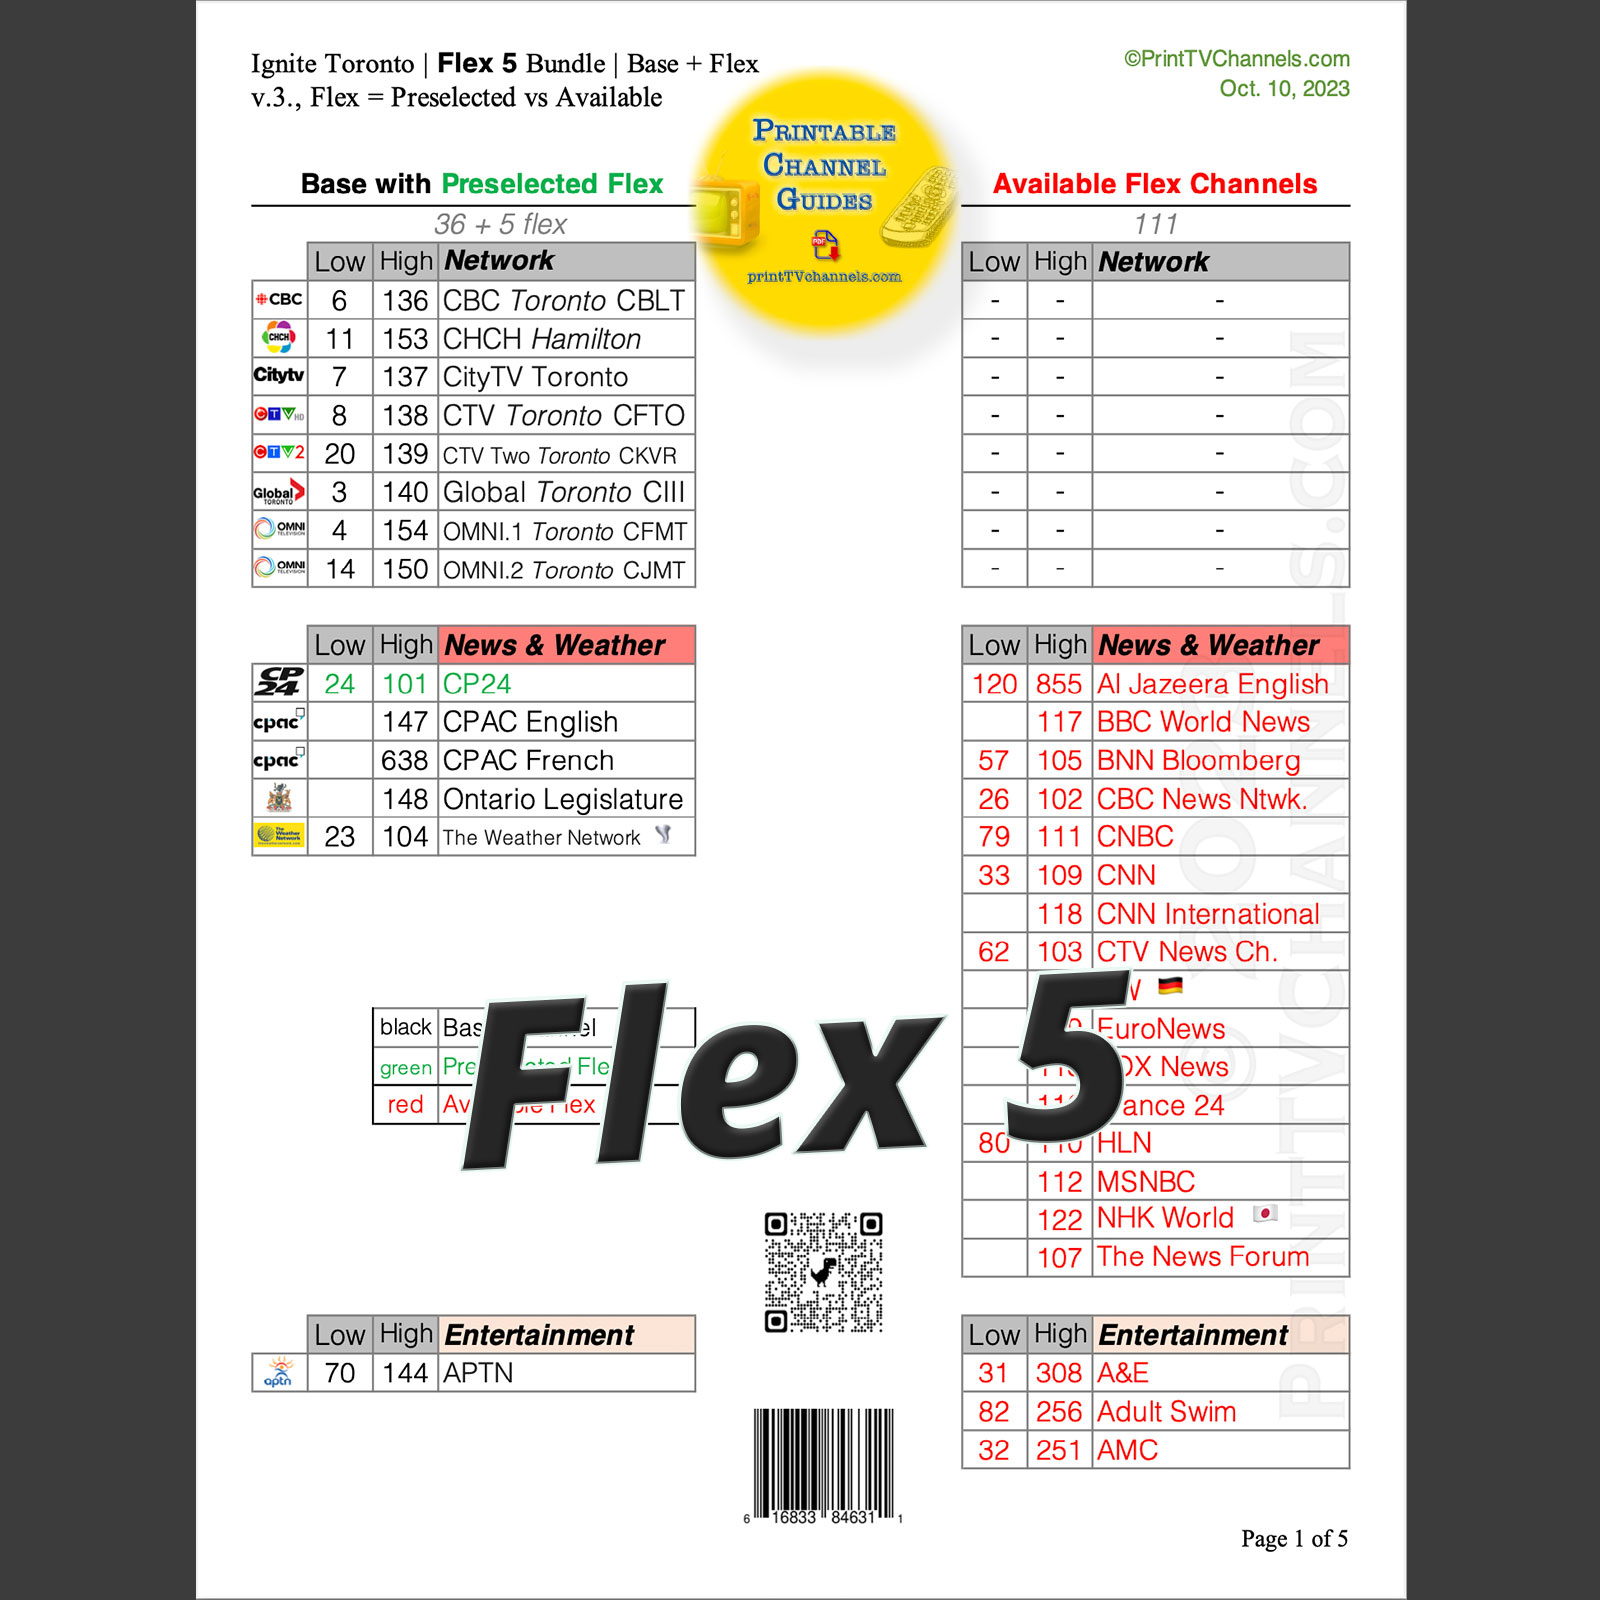 Ignite Flex Channels | Toronto | Flex 5 Channel Guide 2023